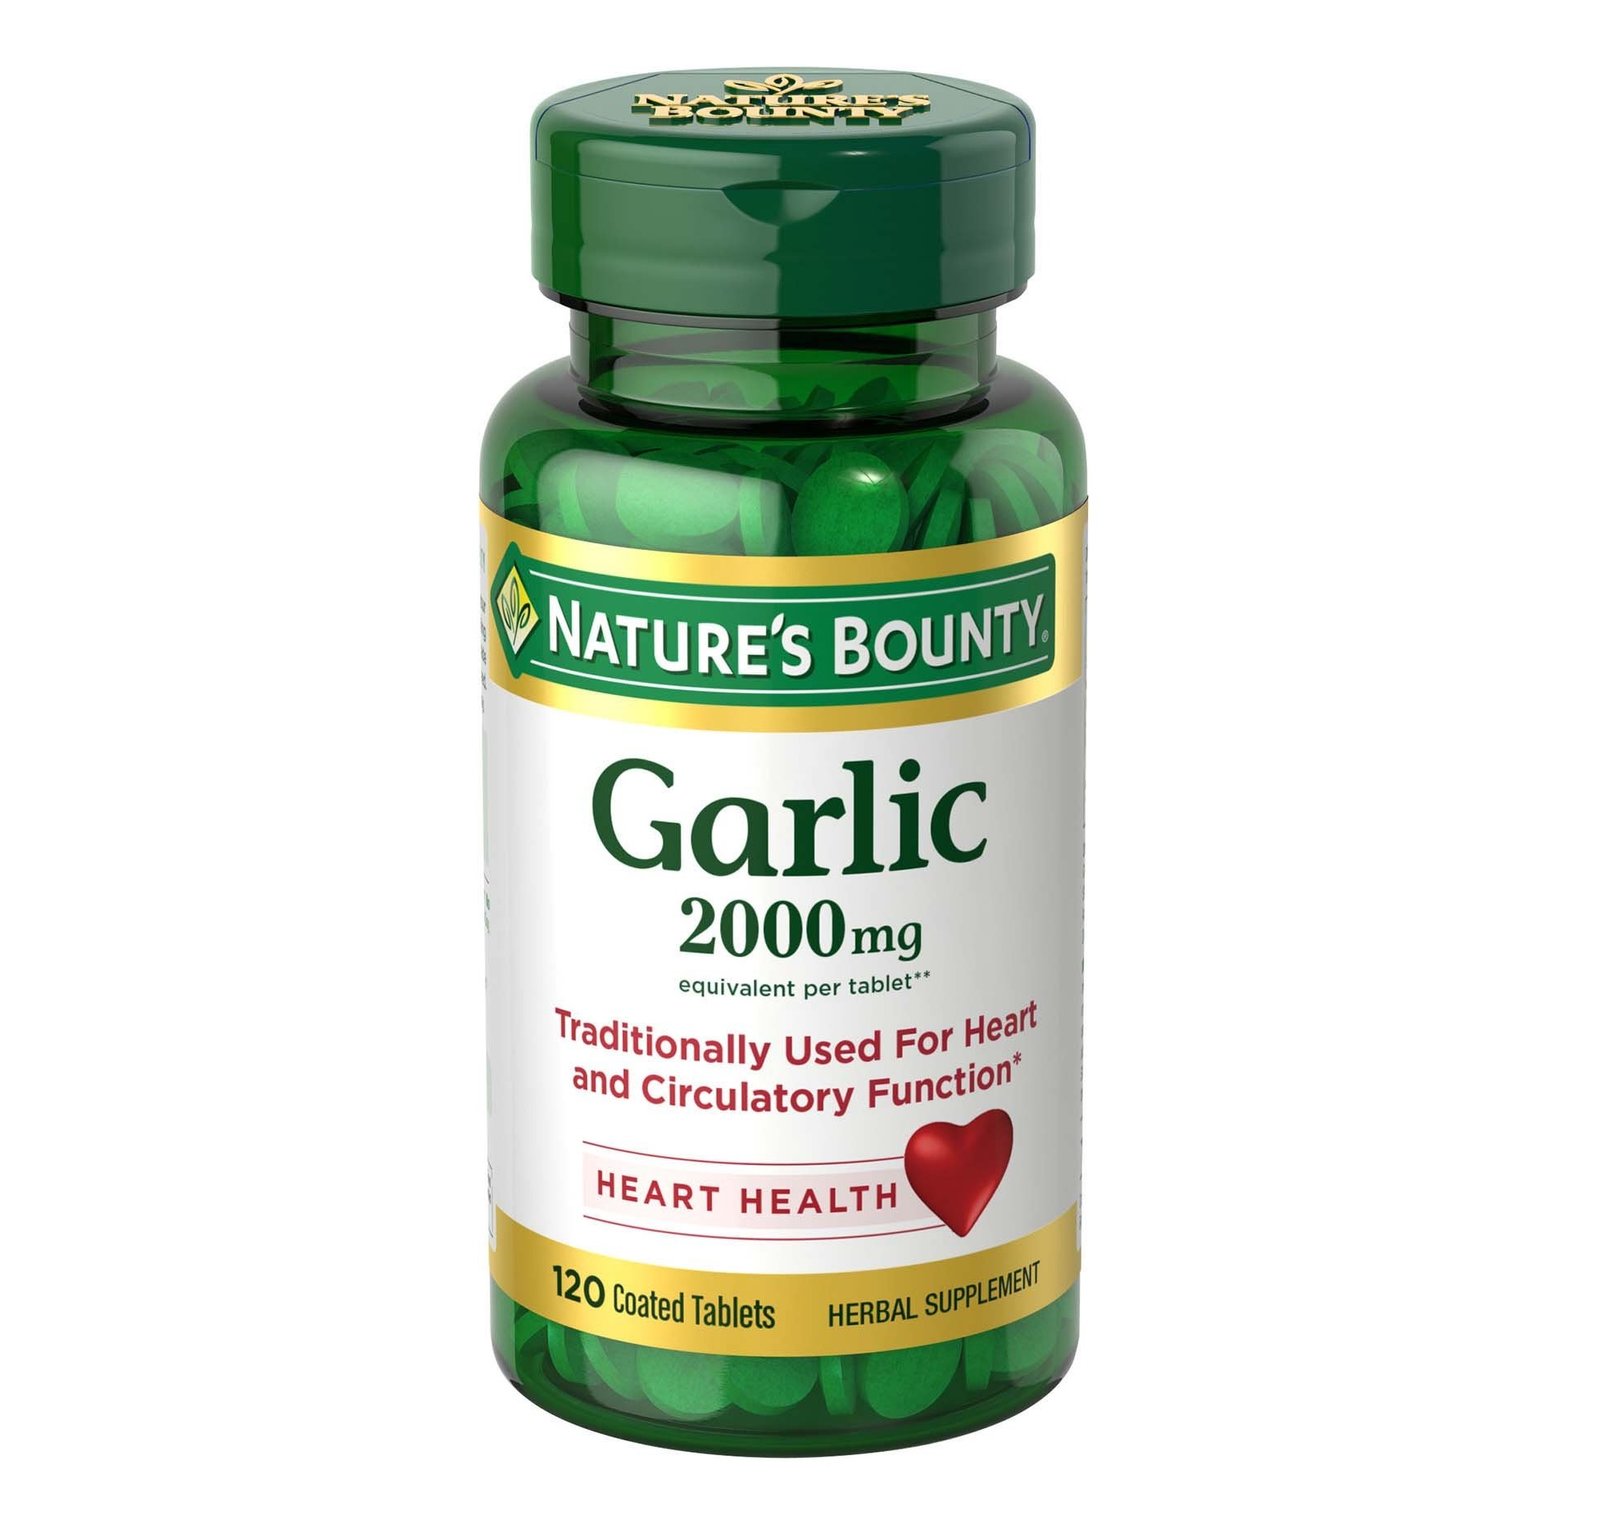 Nature's Bounty Garlic 2000mg Heart Health 120 Tablets